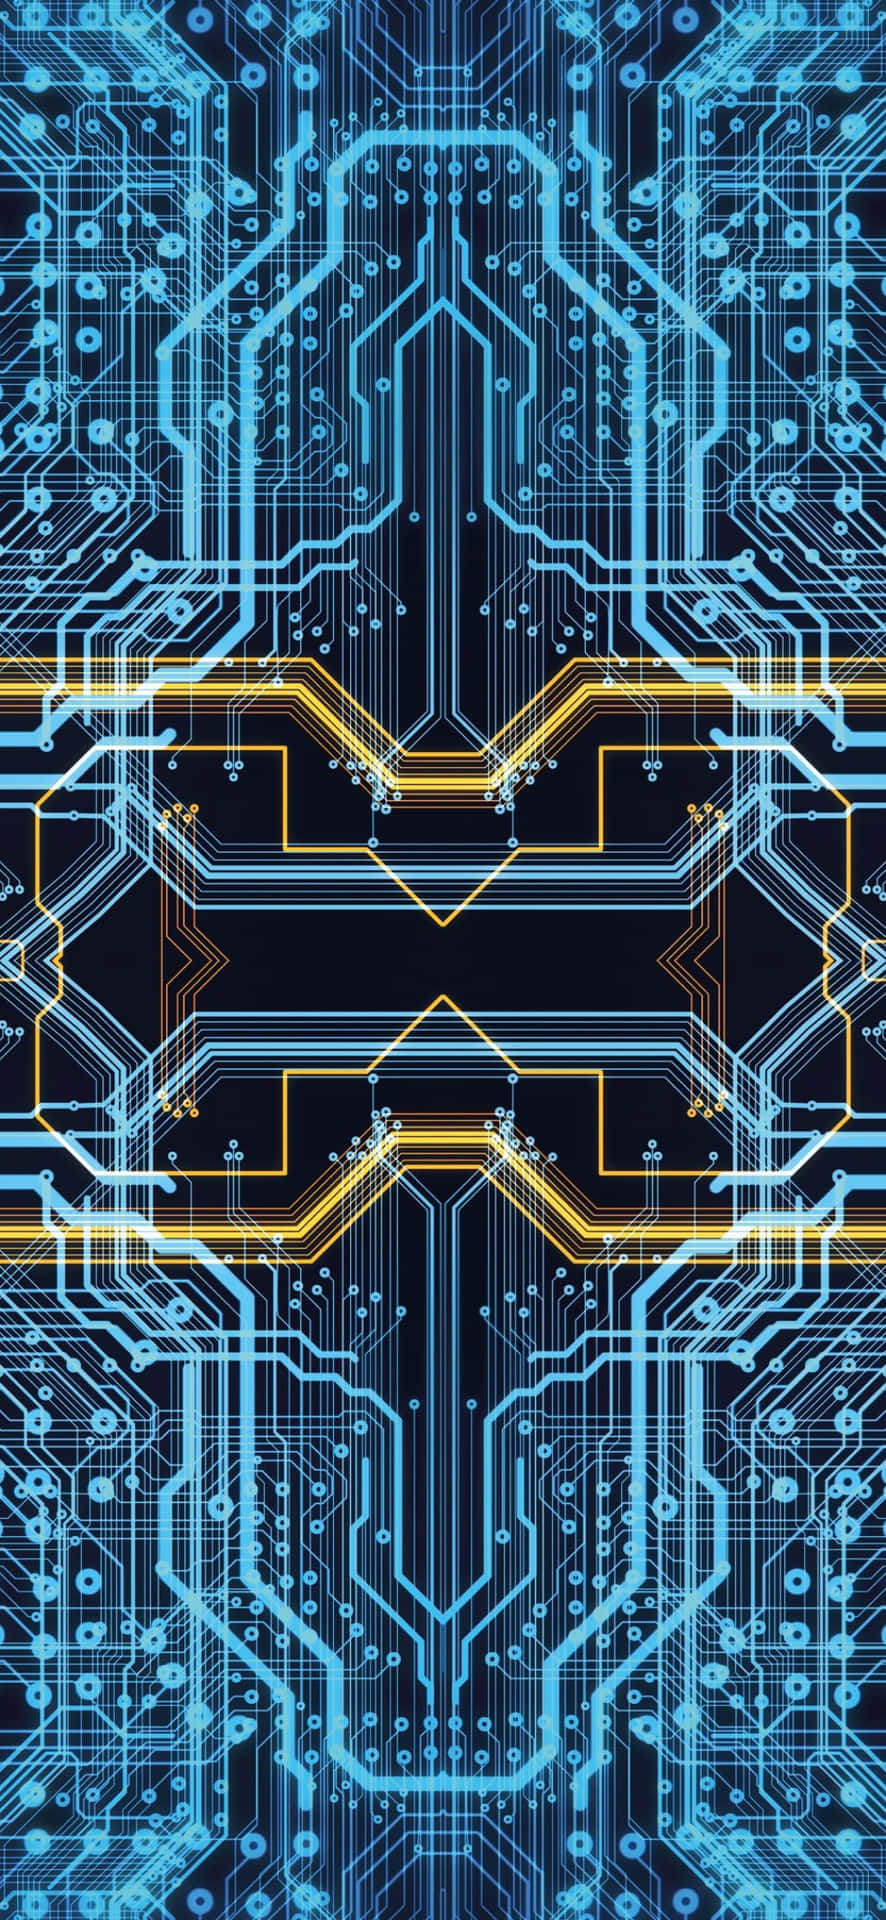 Abstract Circuit Board Design Wallpaper